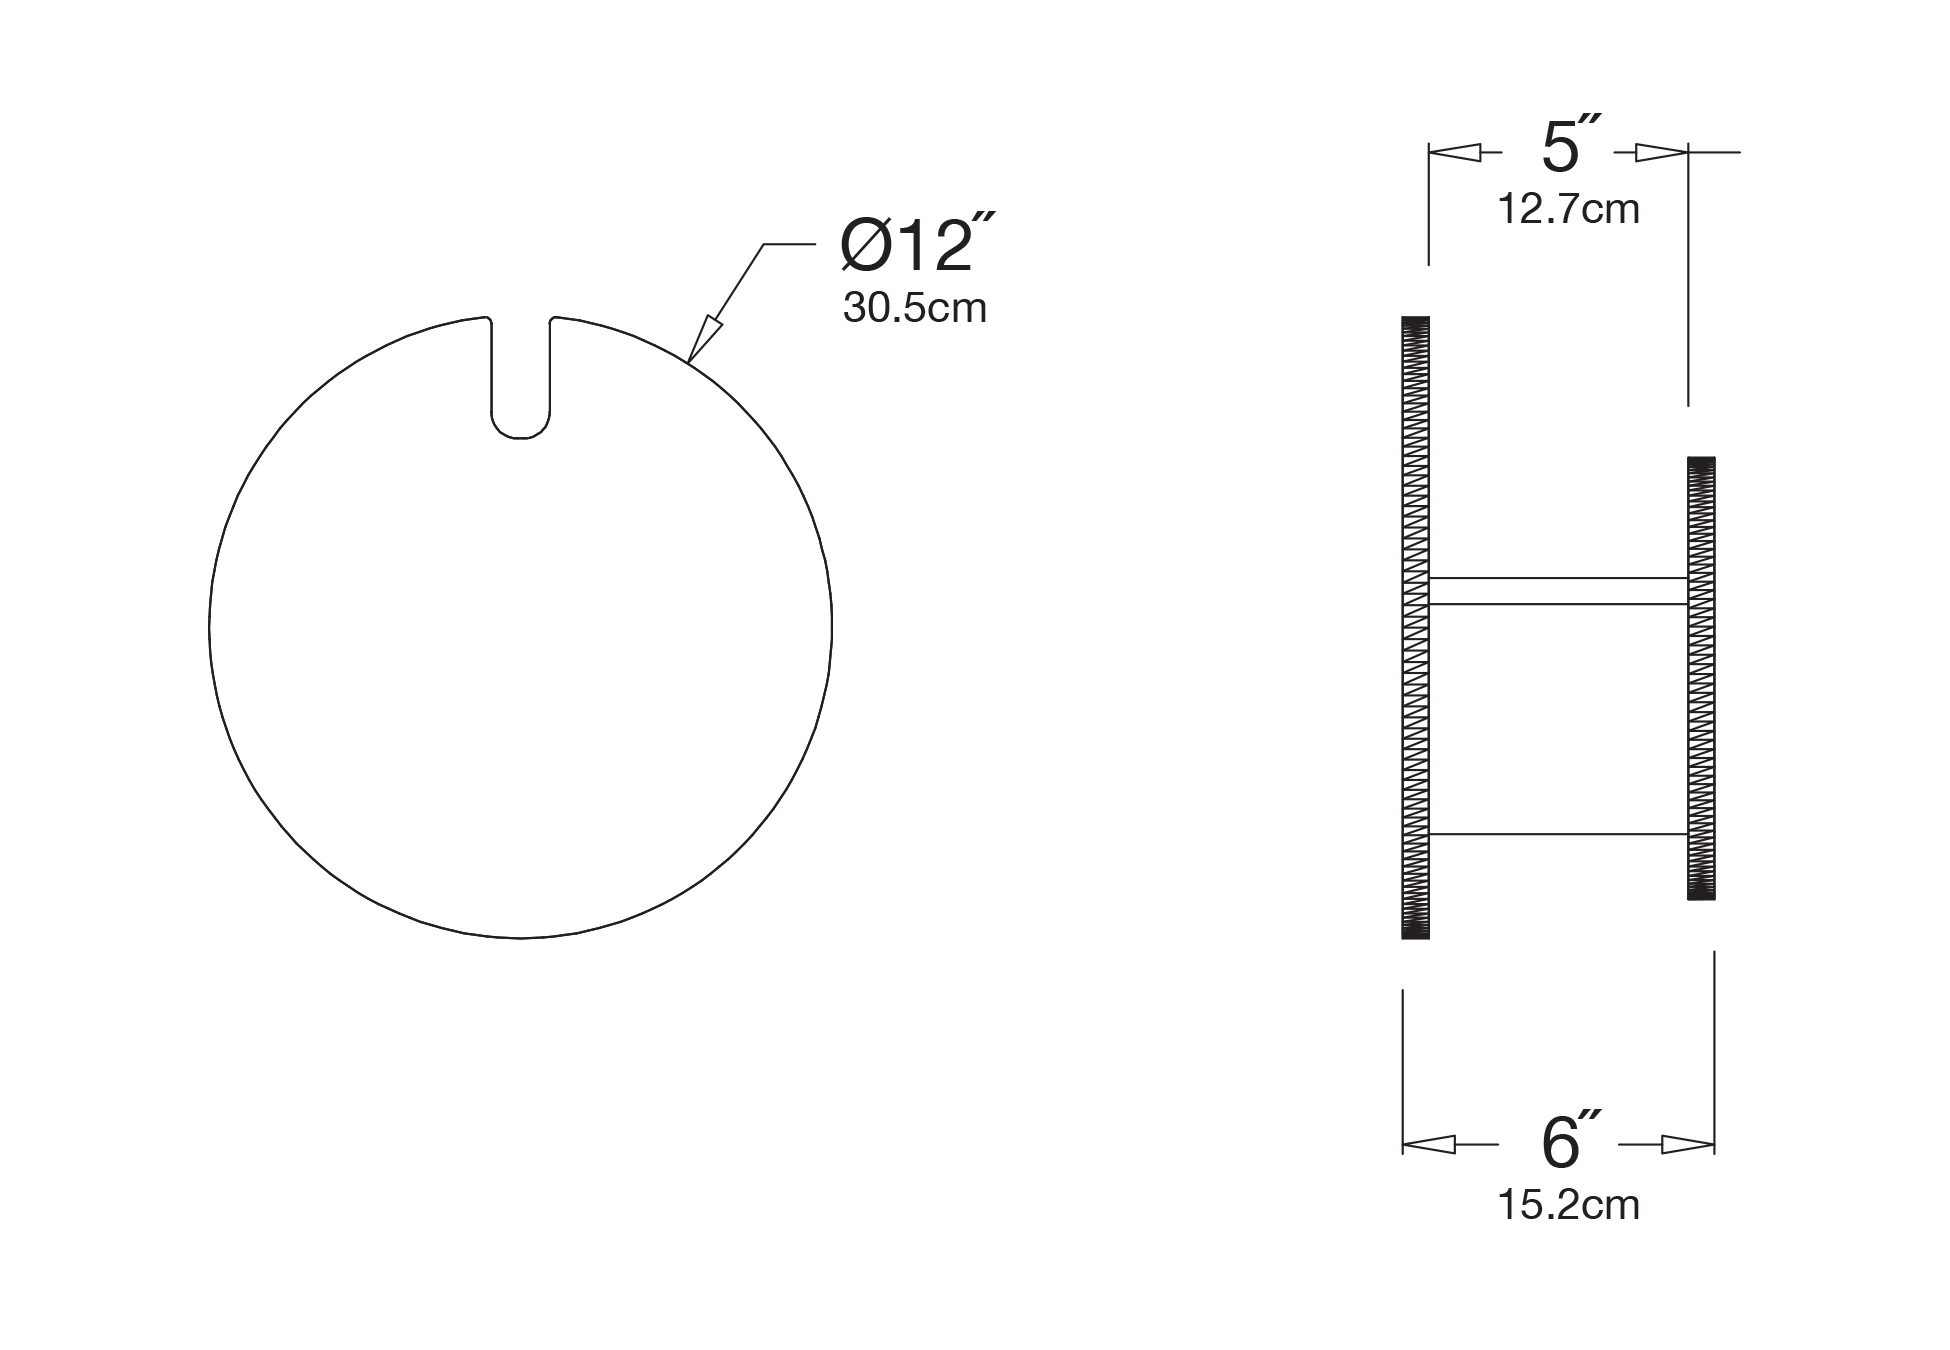 Hoser - Round Hose Reel Dimensions